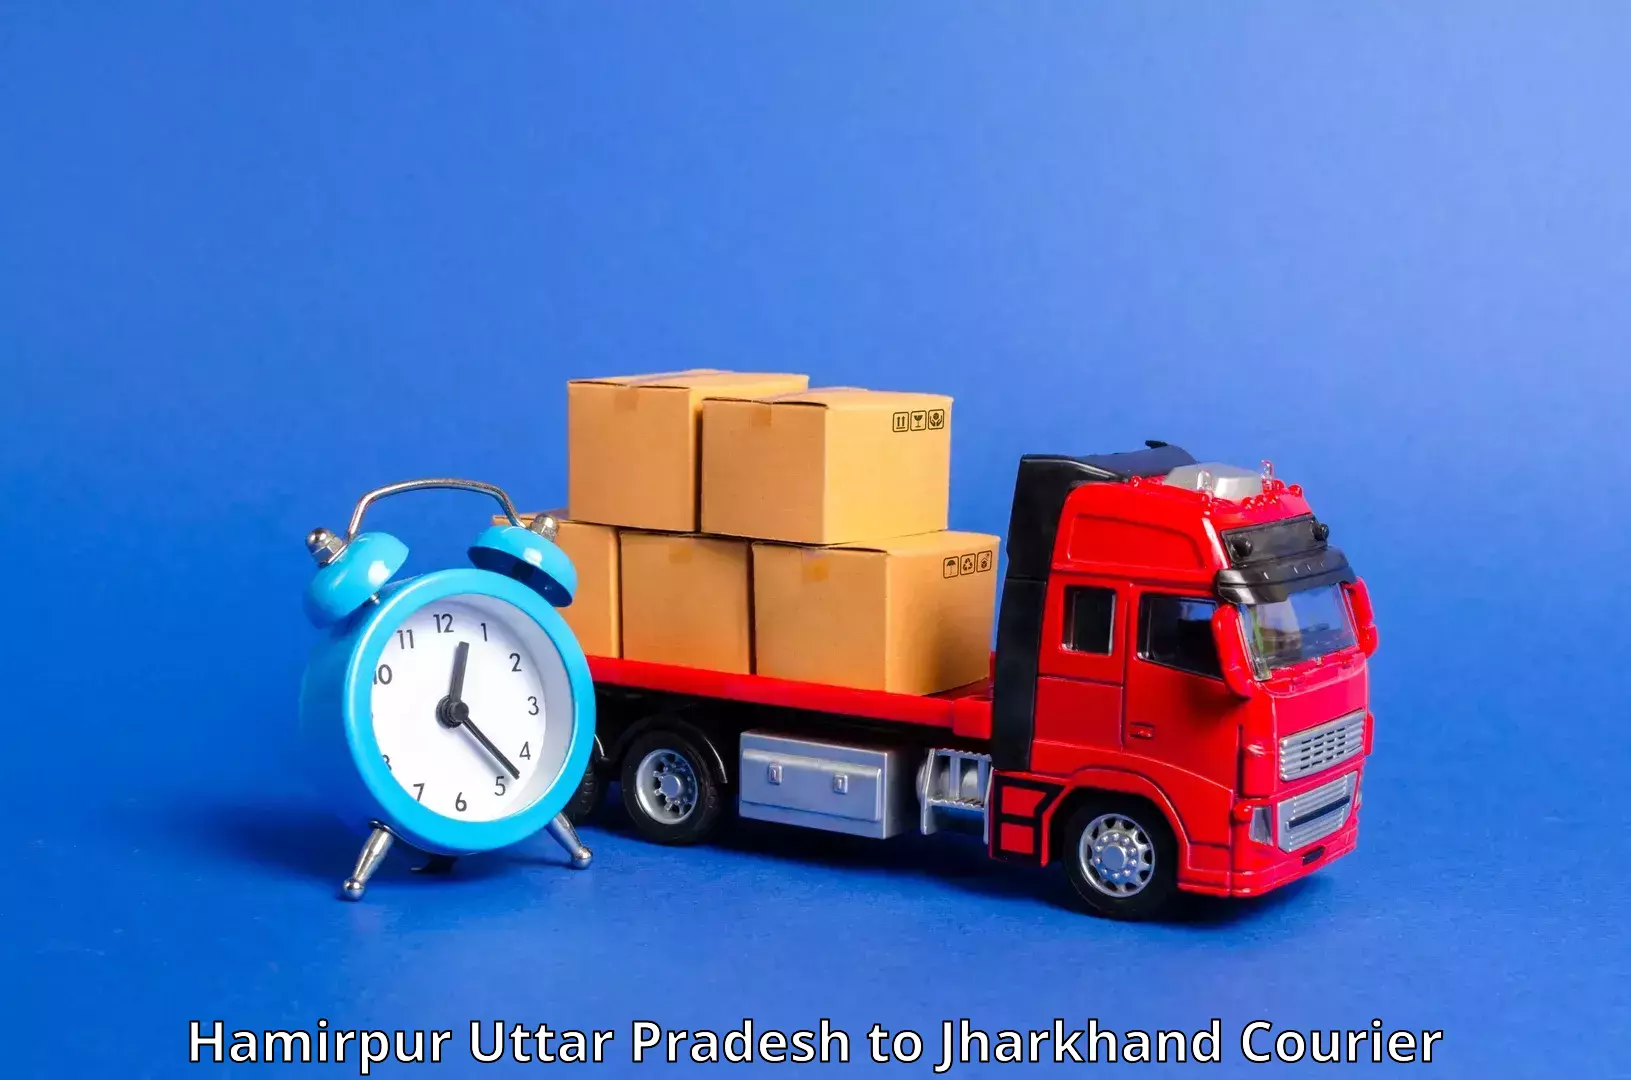 Comprehensive logistics Hamirpur Uttar Pradesh to East Singhbhum